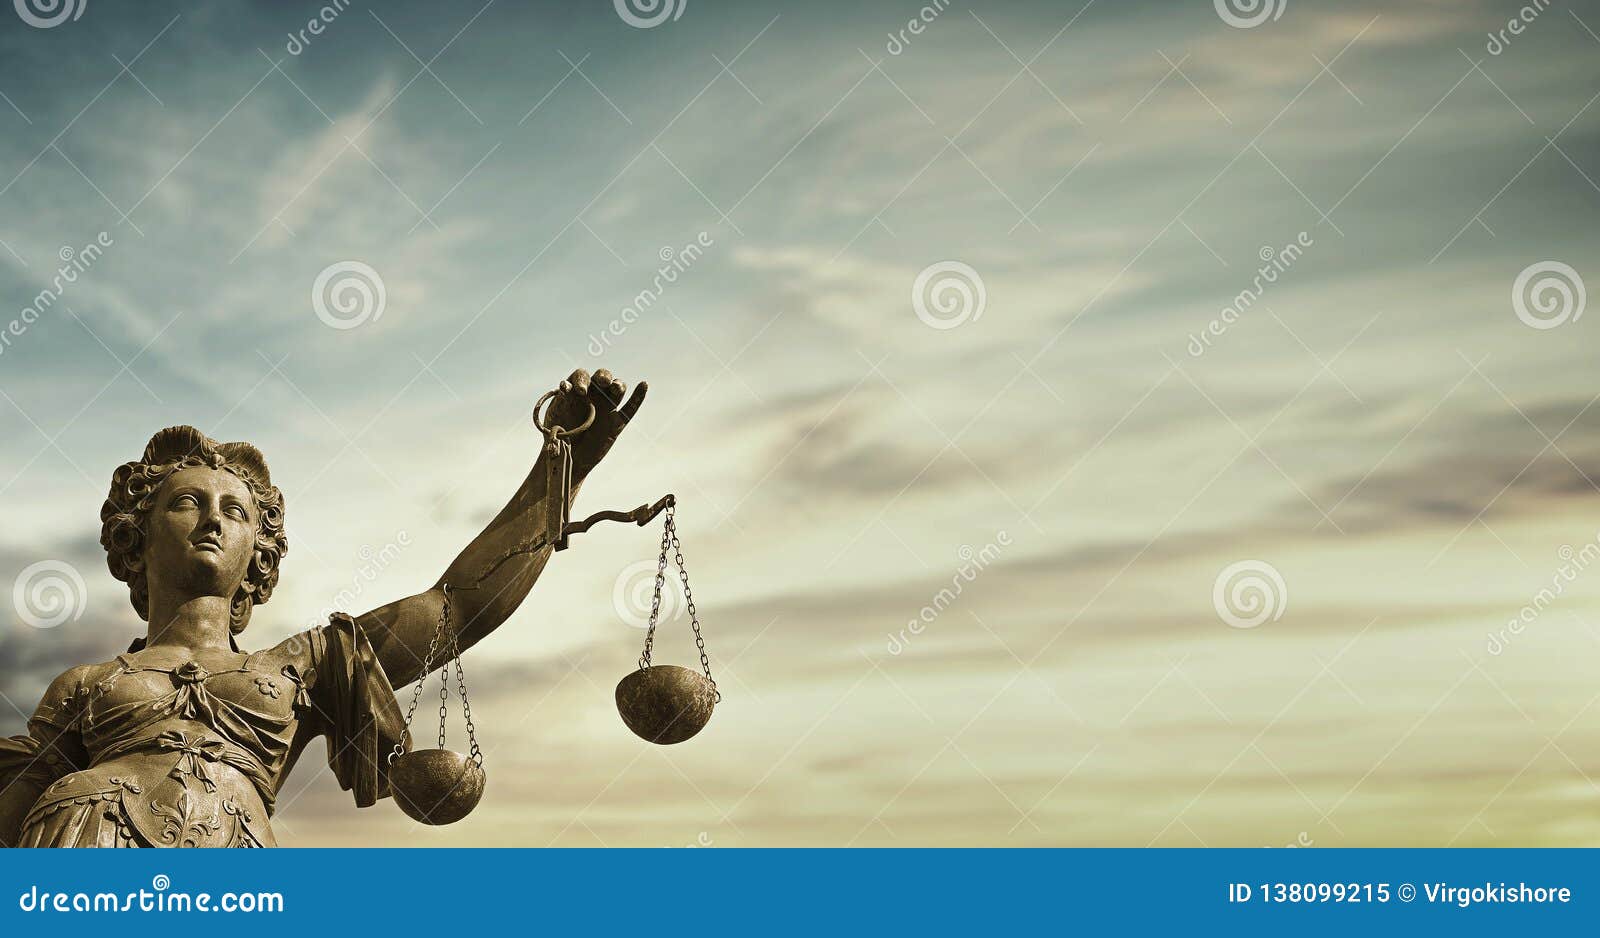 lady justice moral judicial system